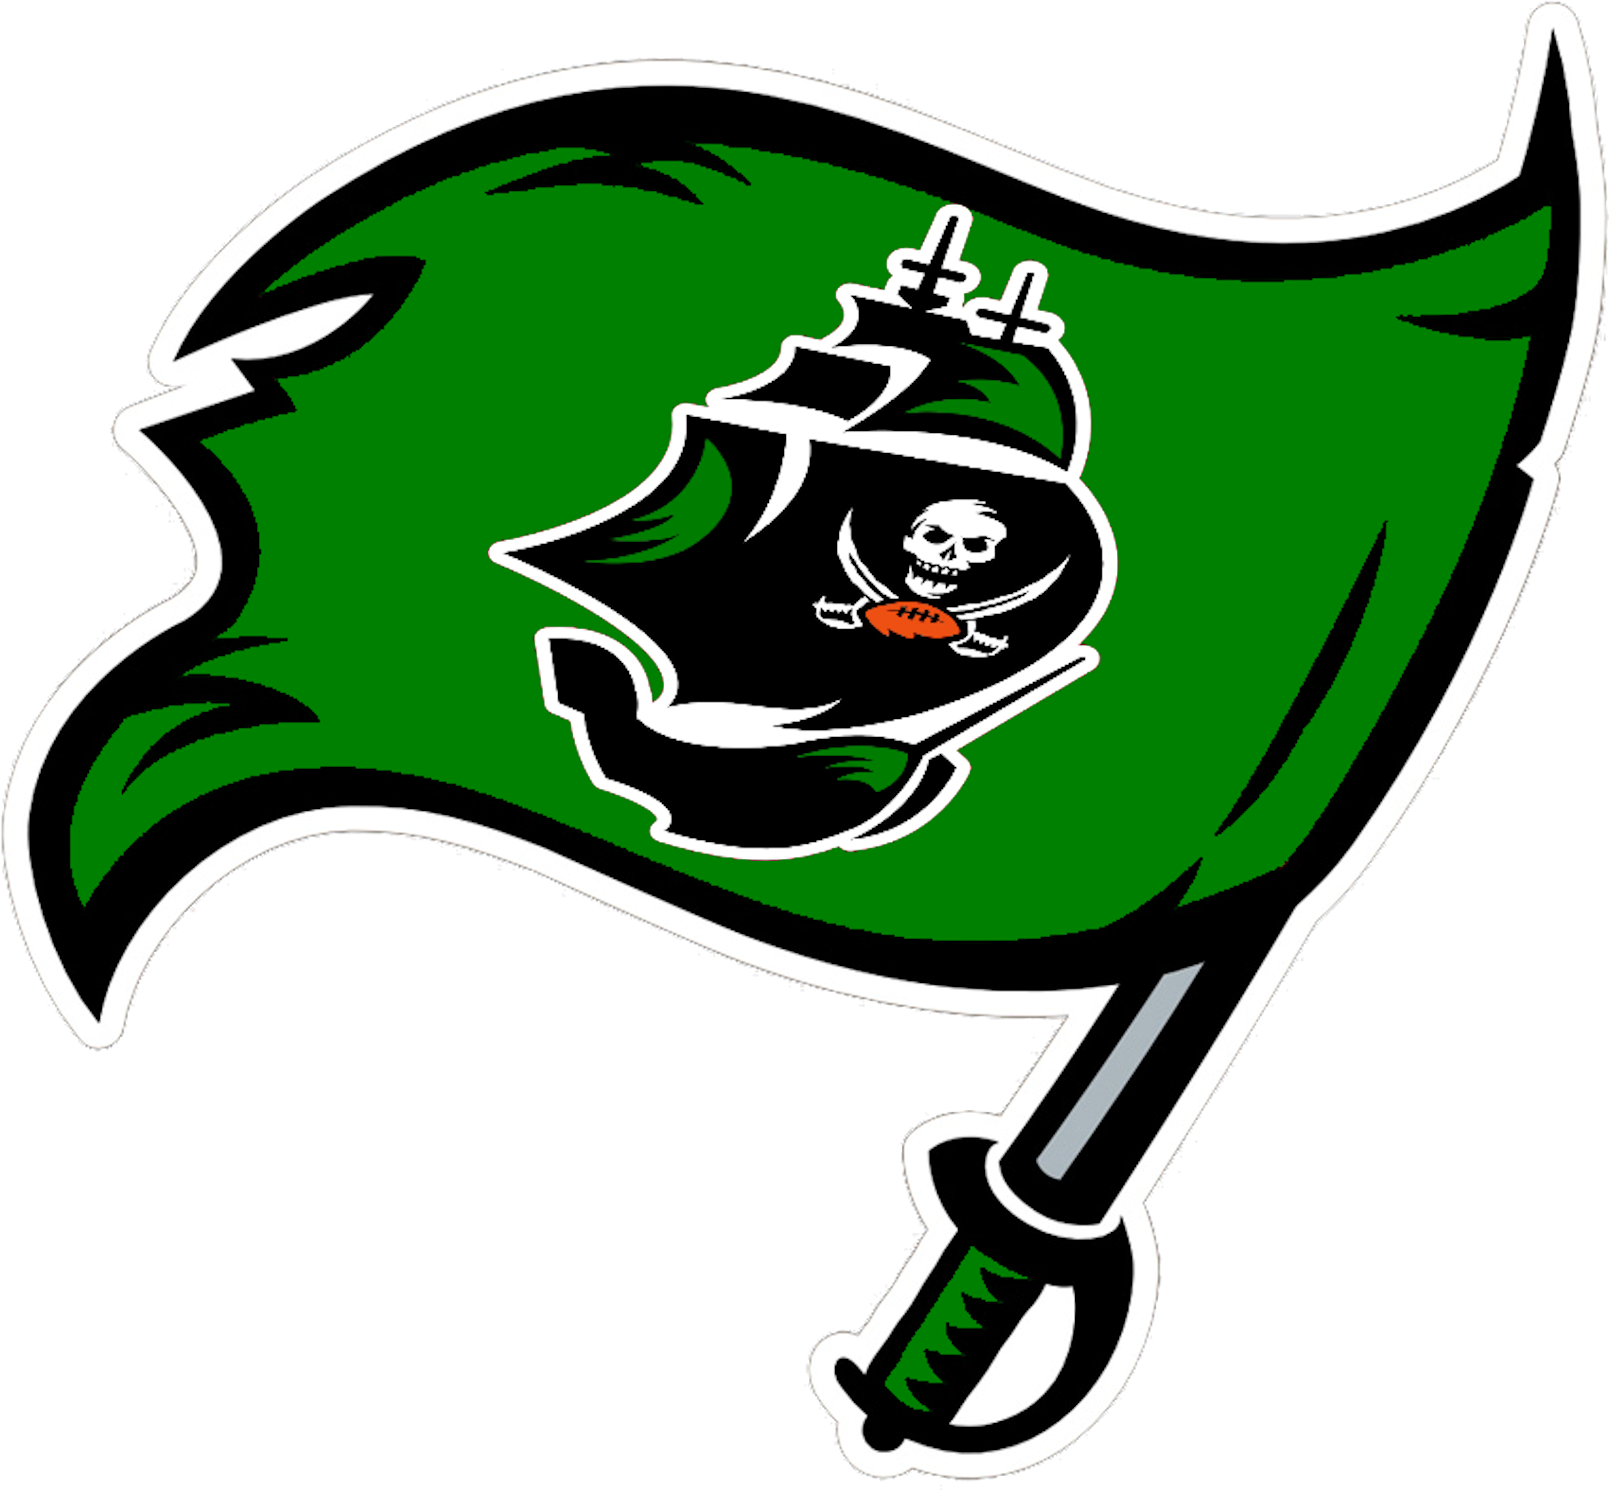 Green Bucks Flag With Ship Image - Tampa Bay Buccaneers (1631x1786)